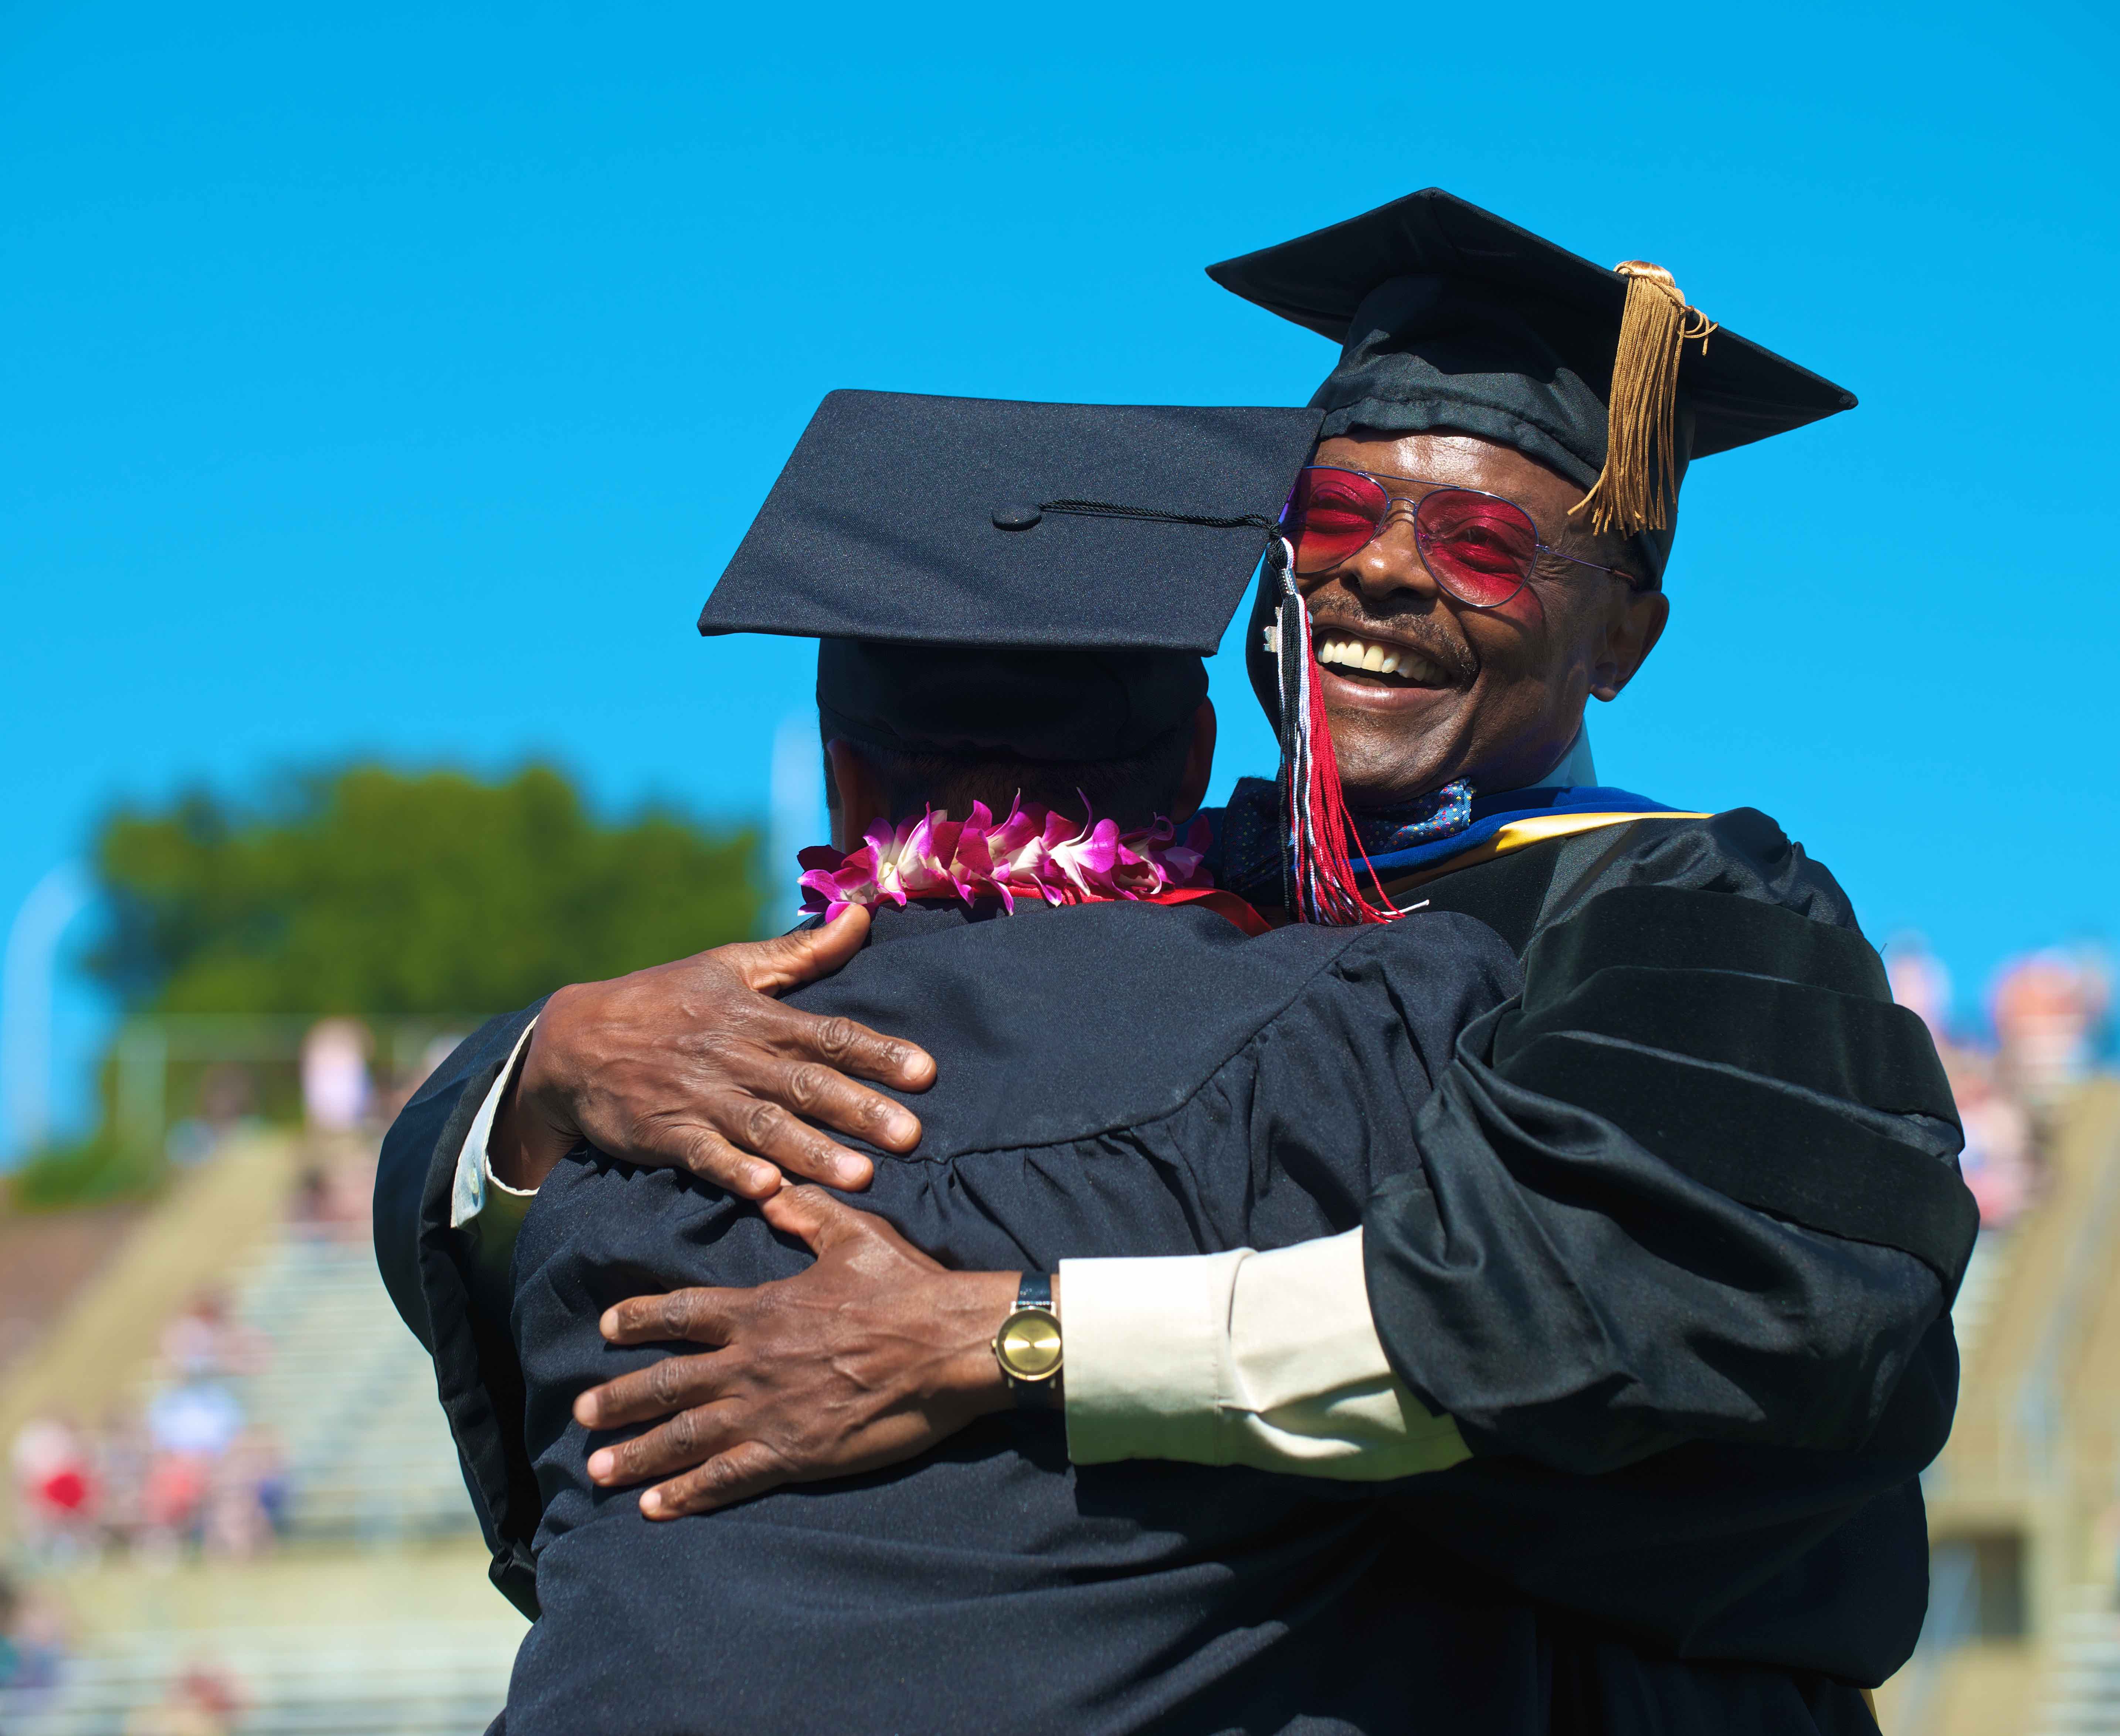 Two men embracing at graduation